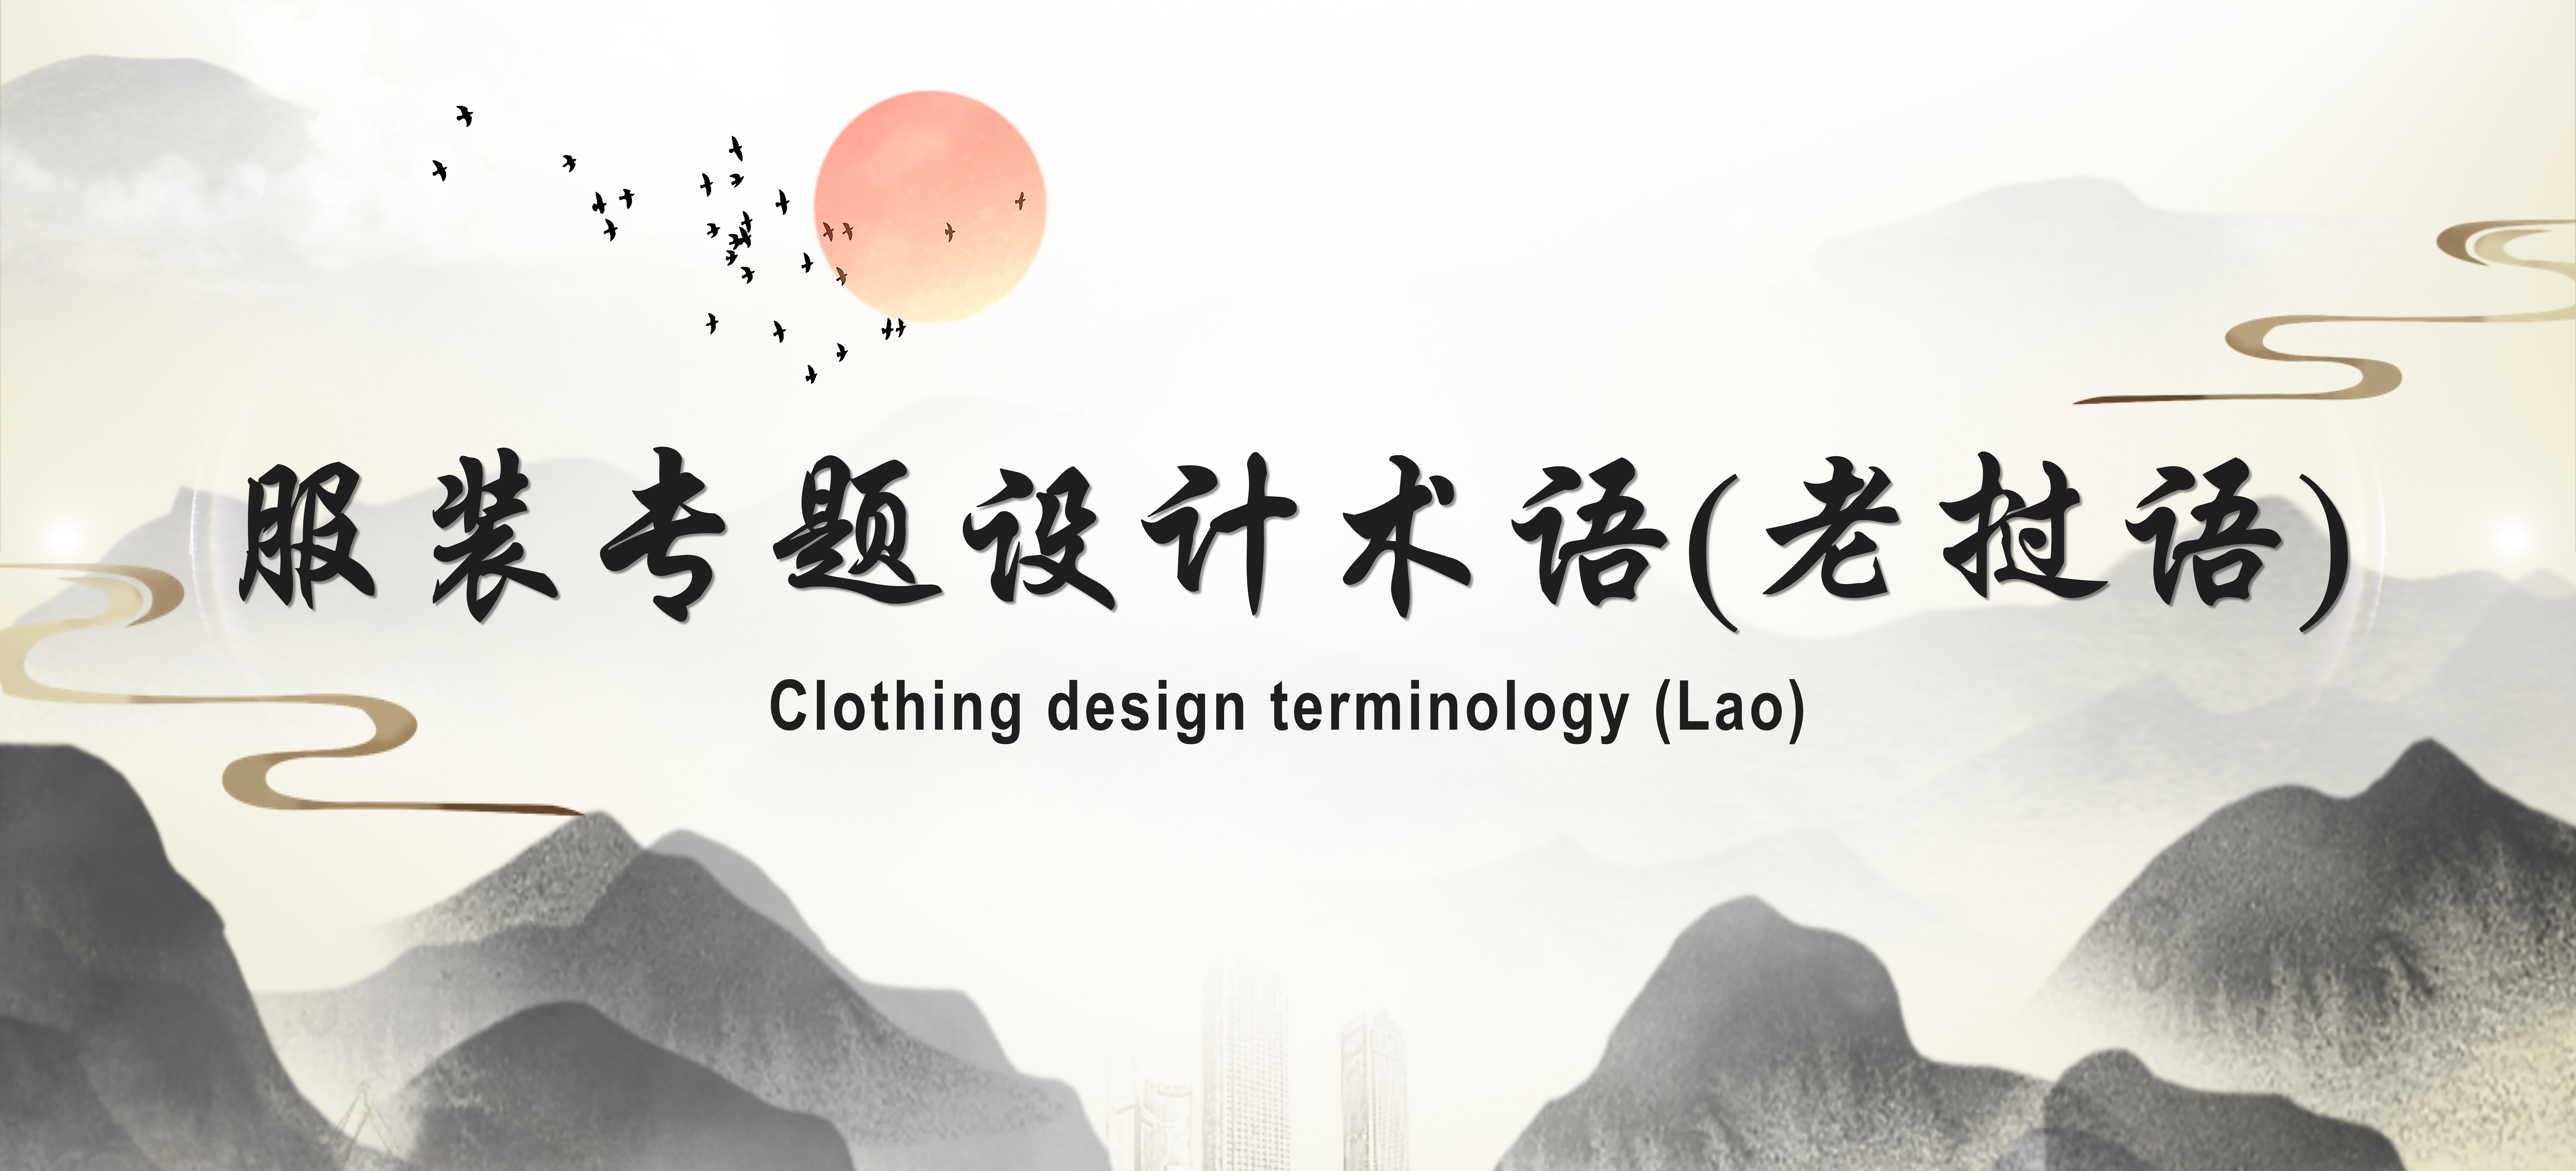 Clothing design terminology (Lao)